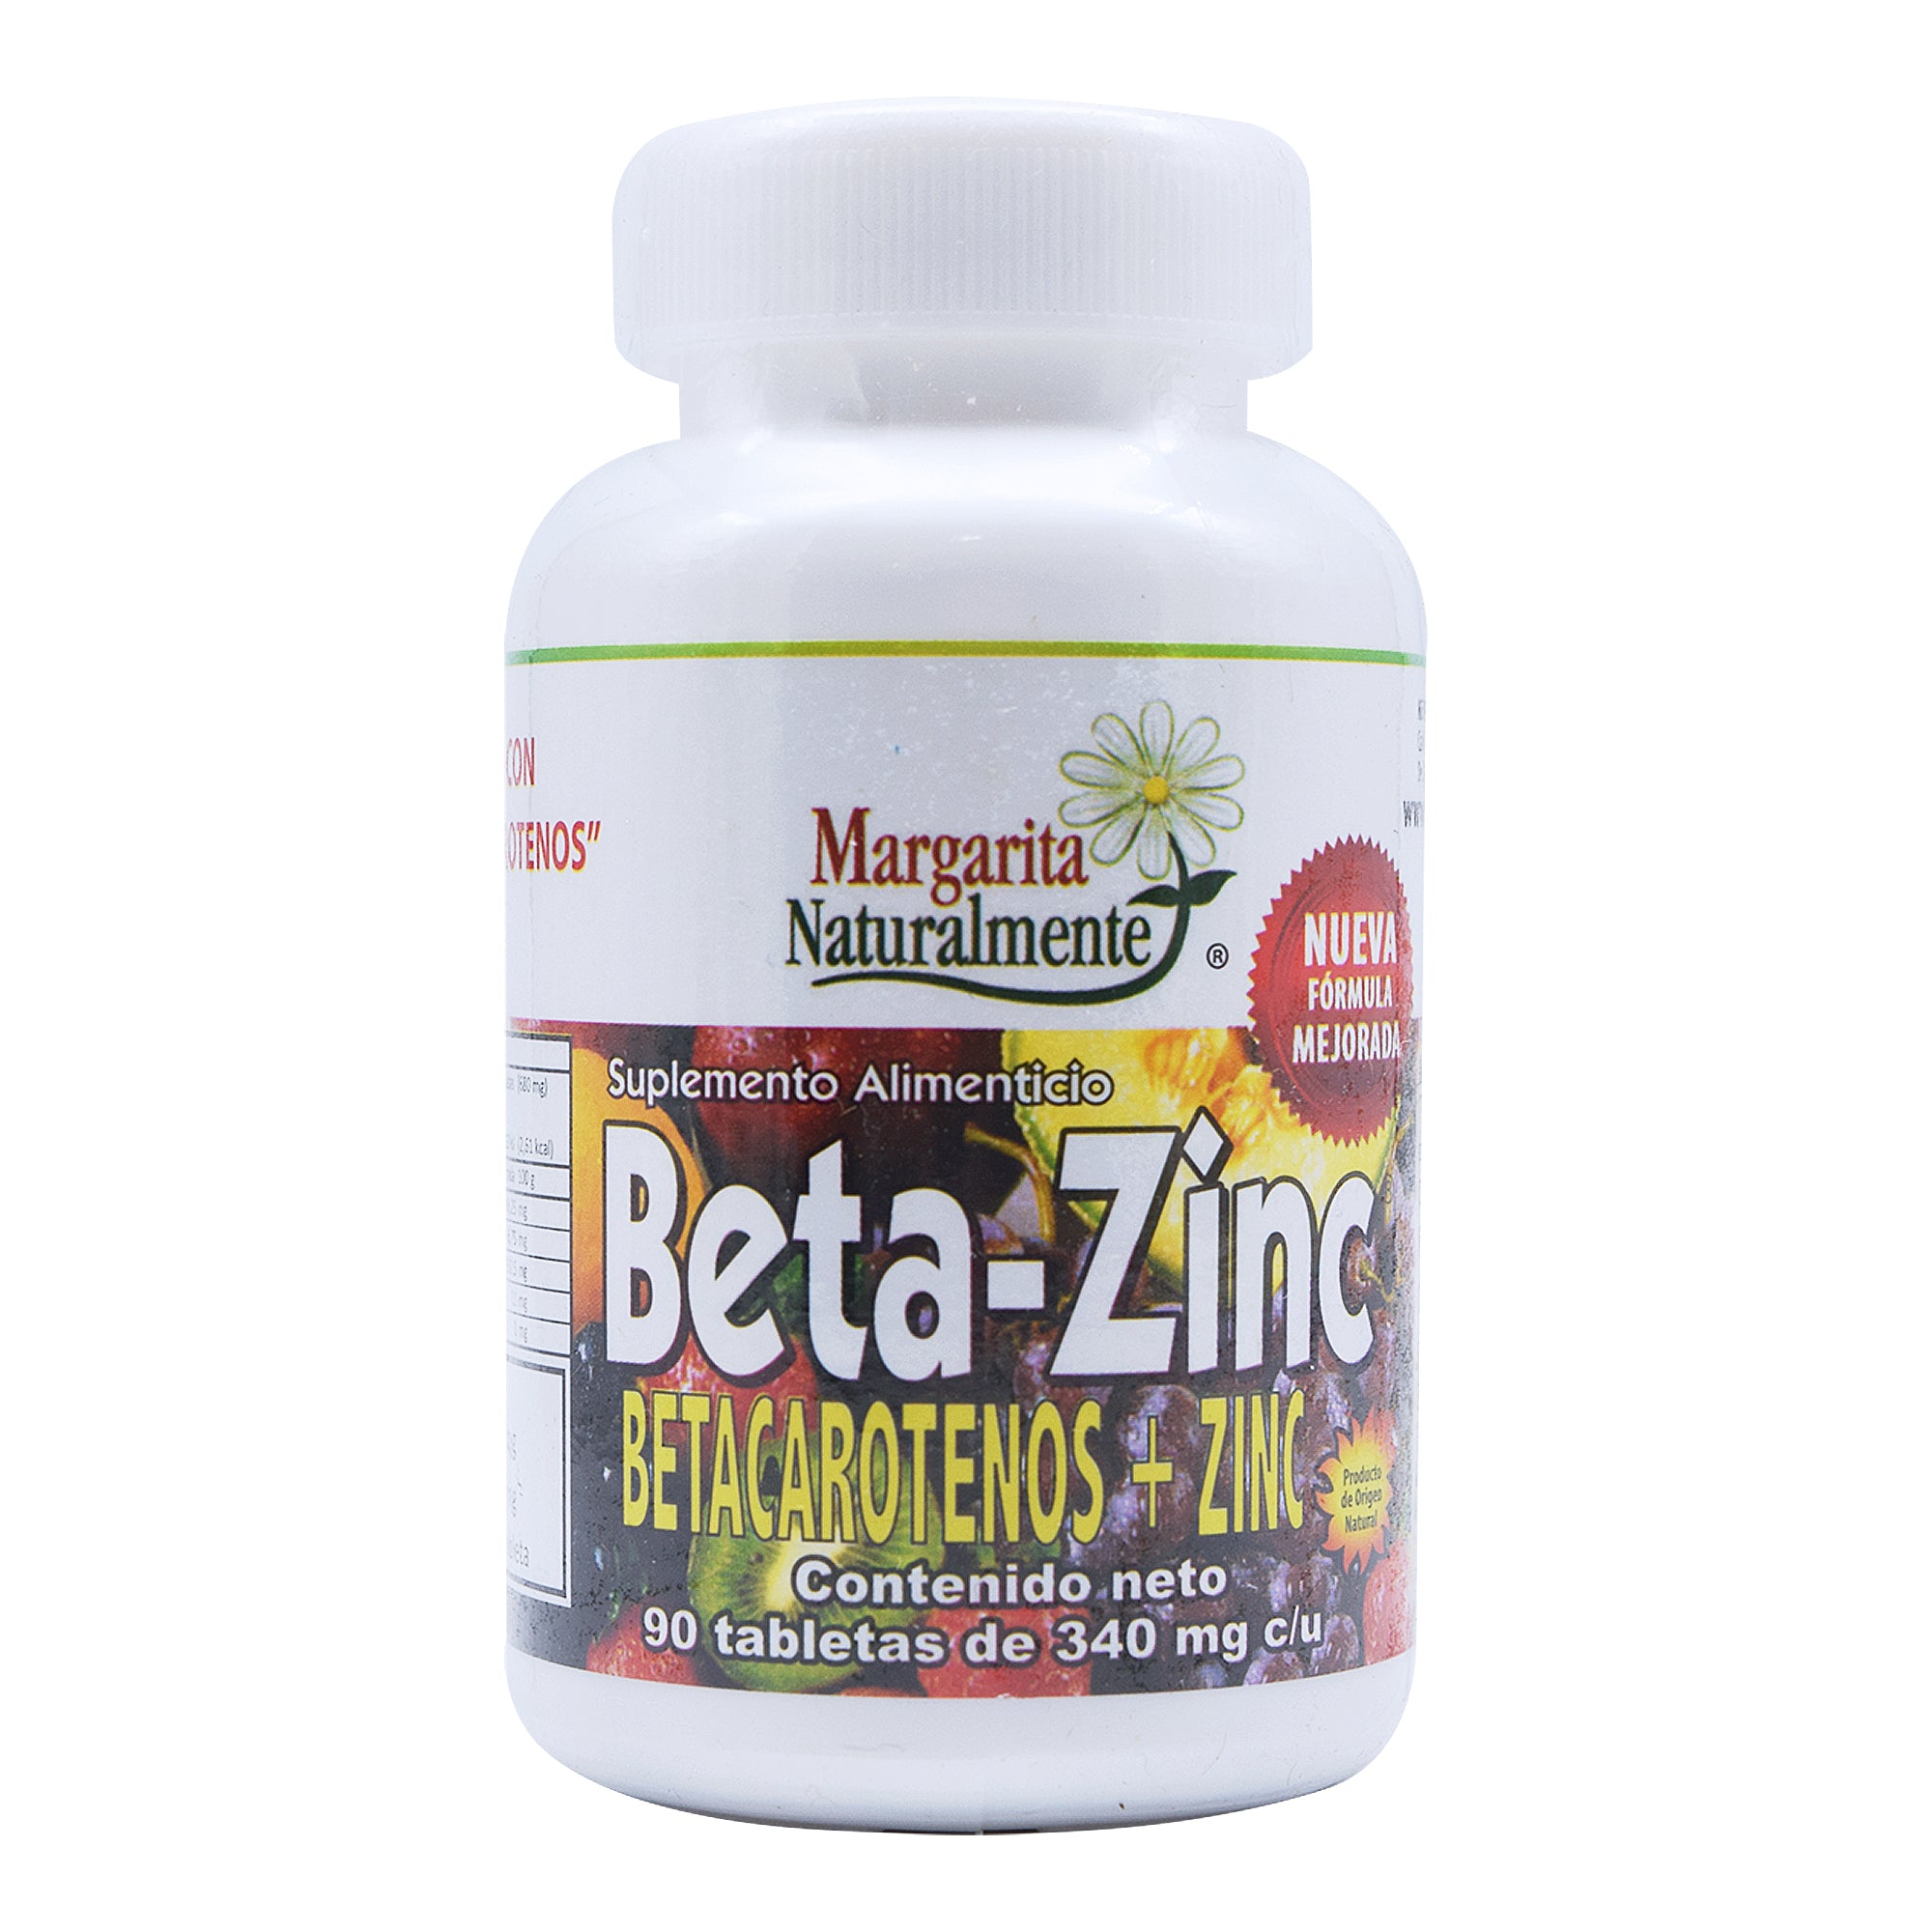 Beta zinc betacaroteno 90 tab